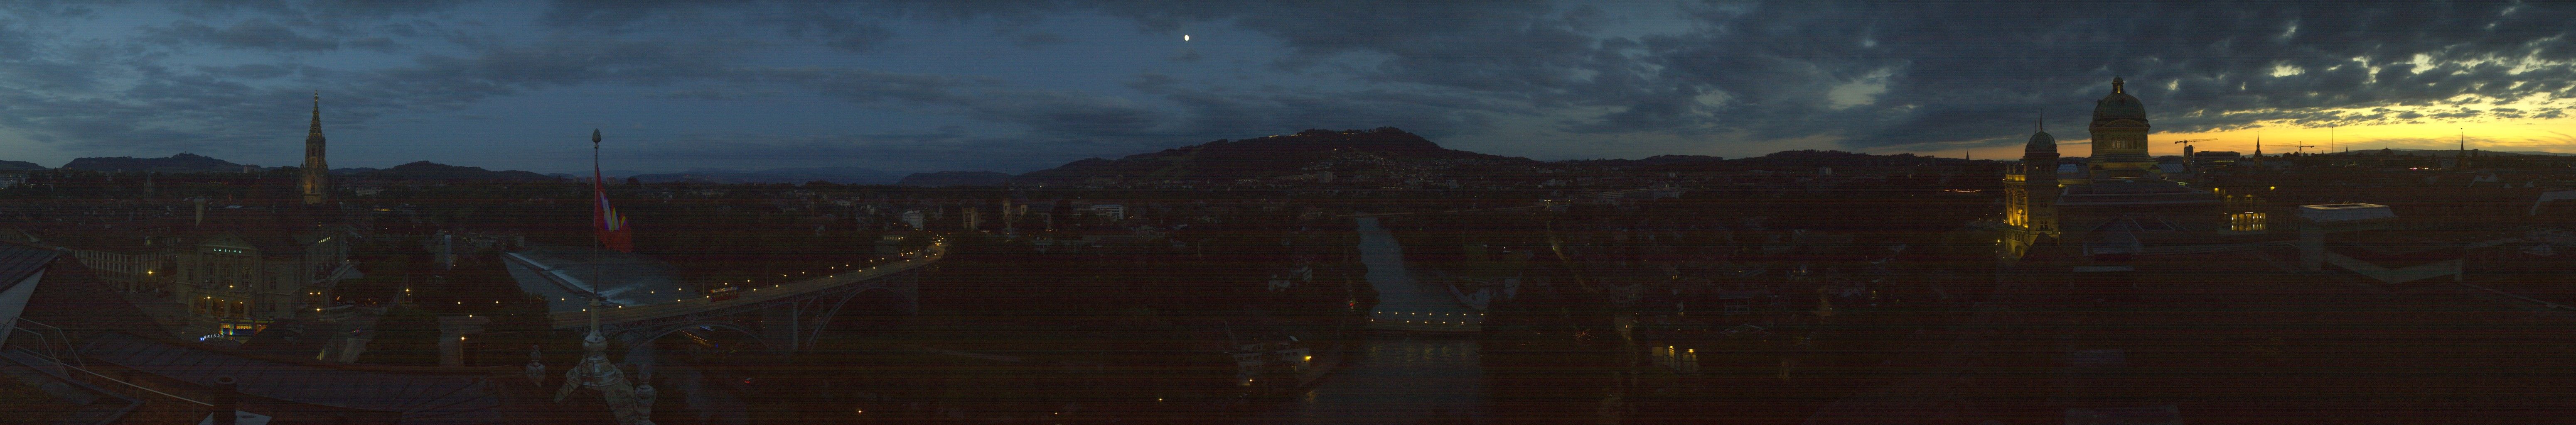 Bern: Bellevue Palace Bern